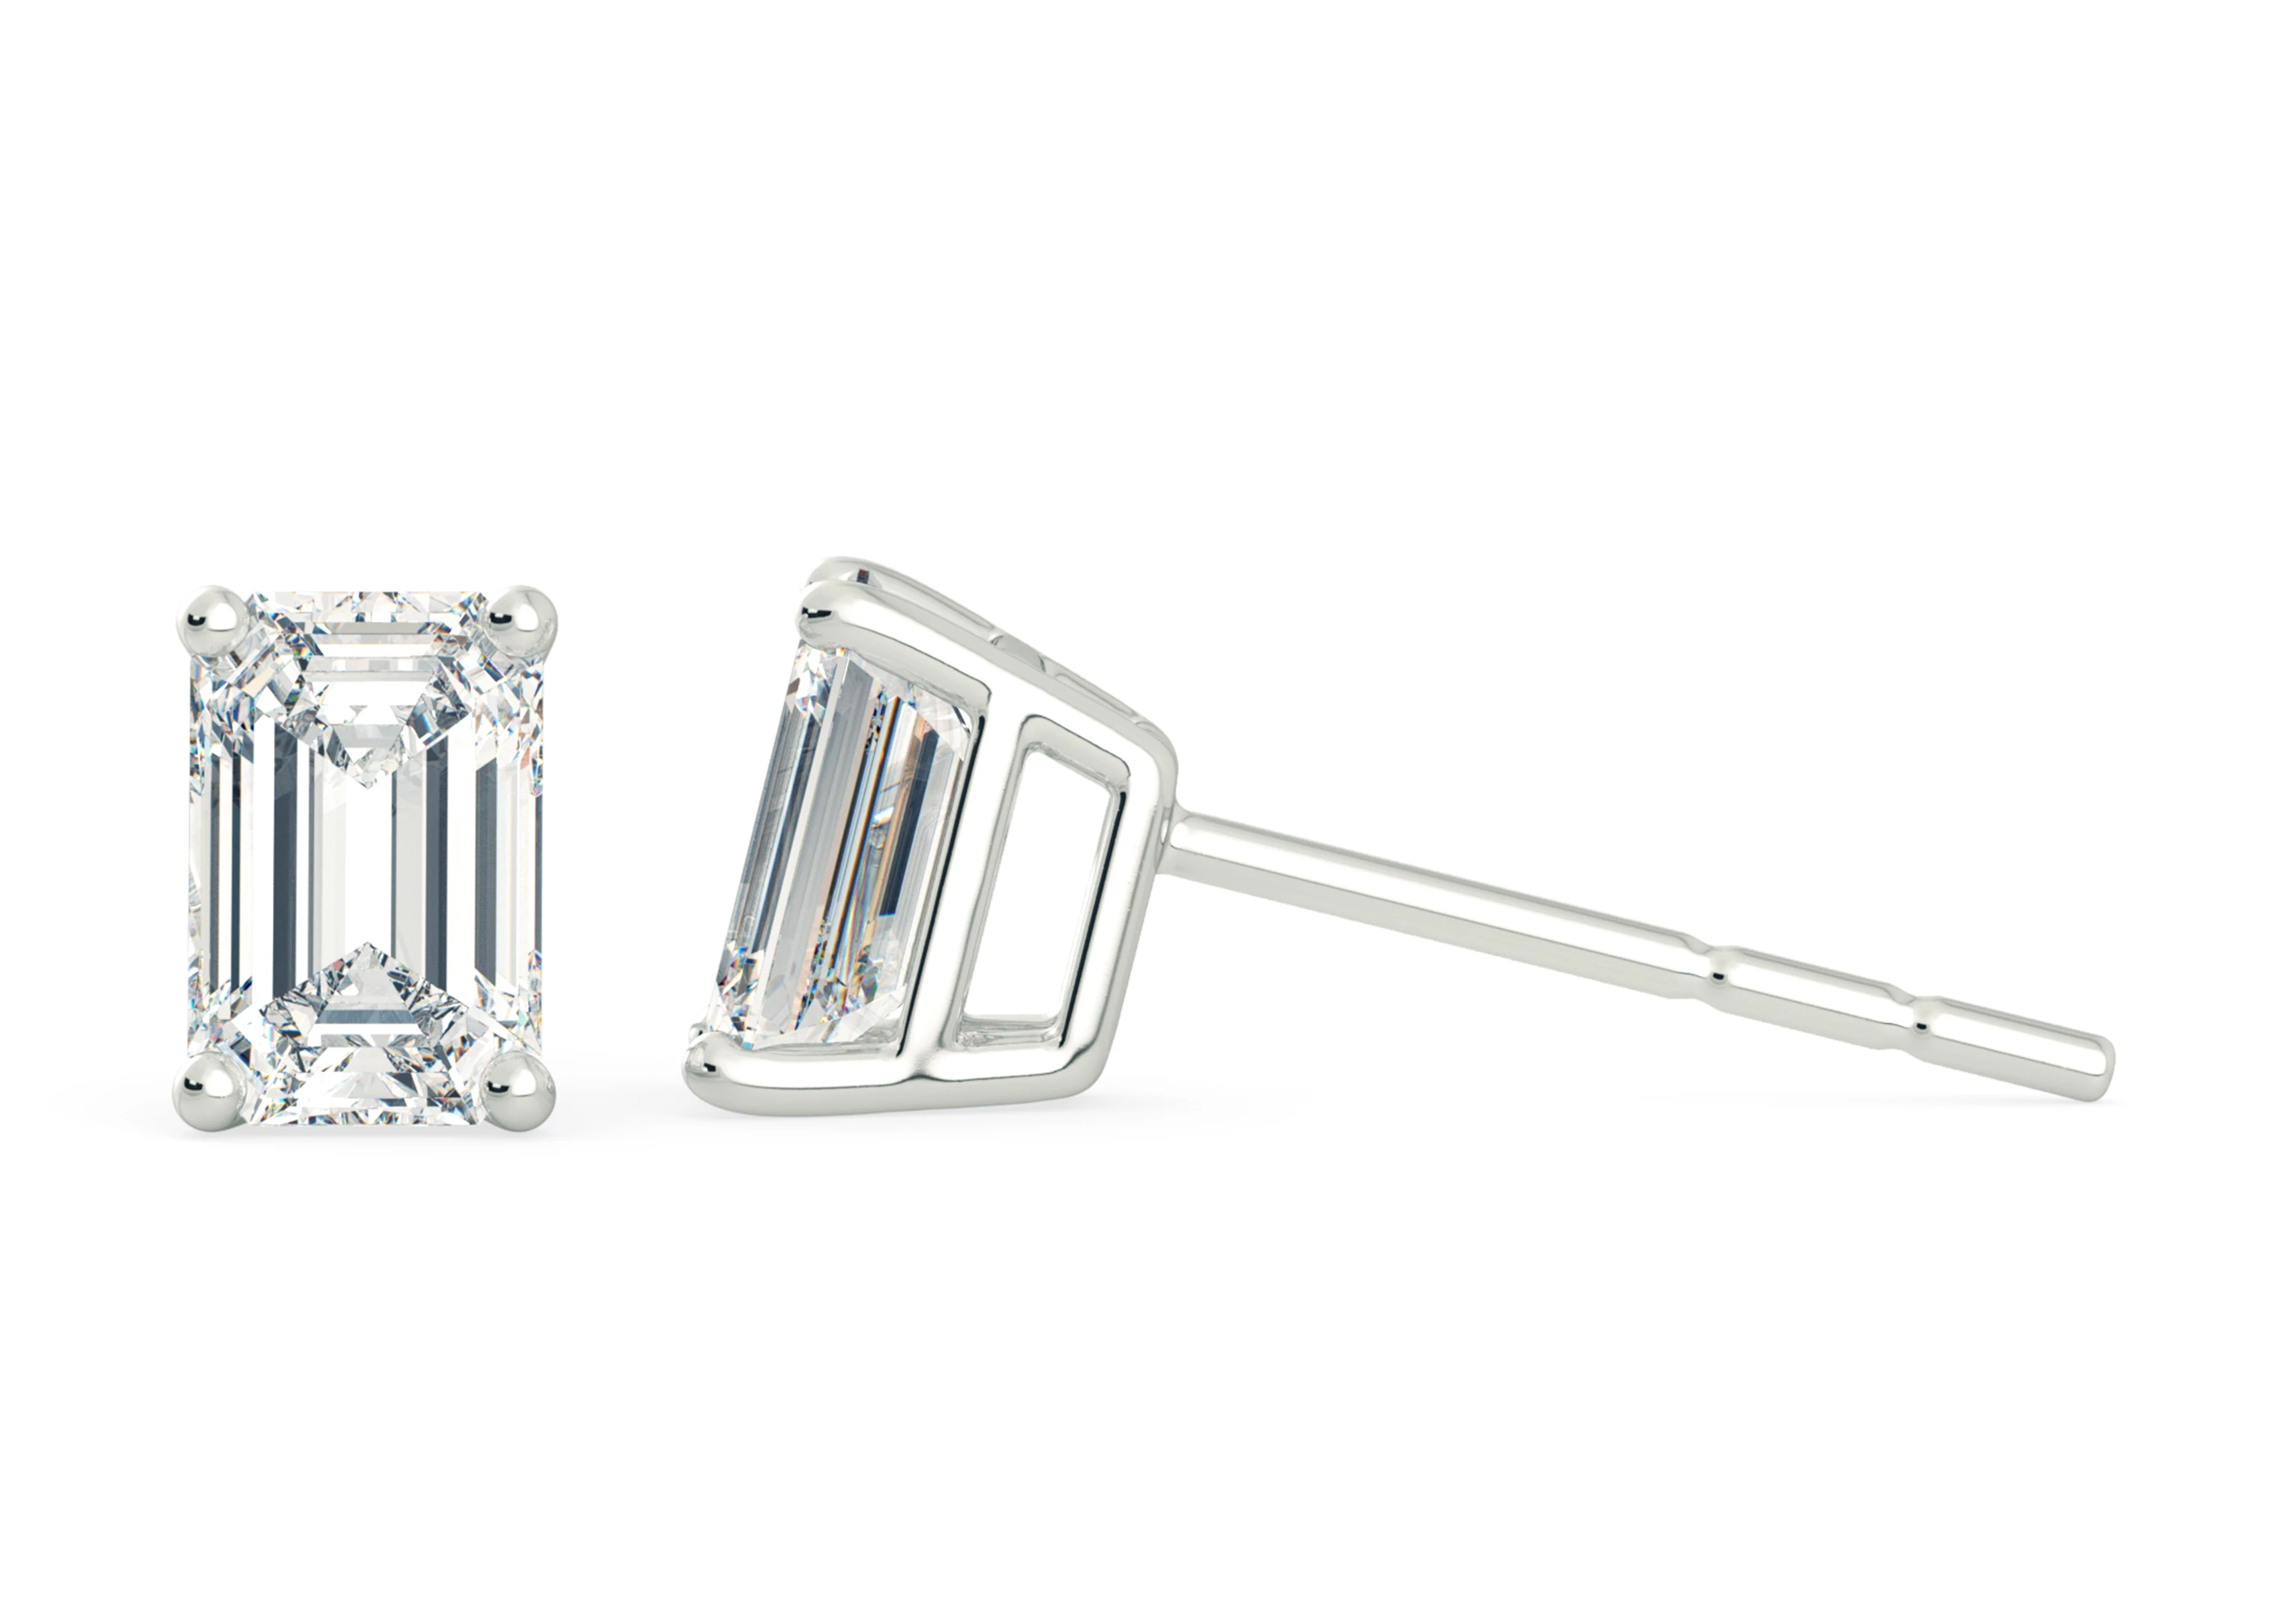 Half Carat Emerald Diamond Stud Earrings in Platinum 950